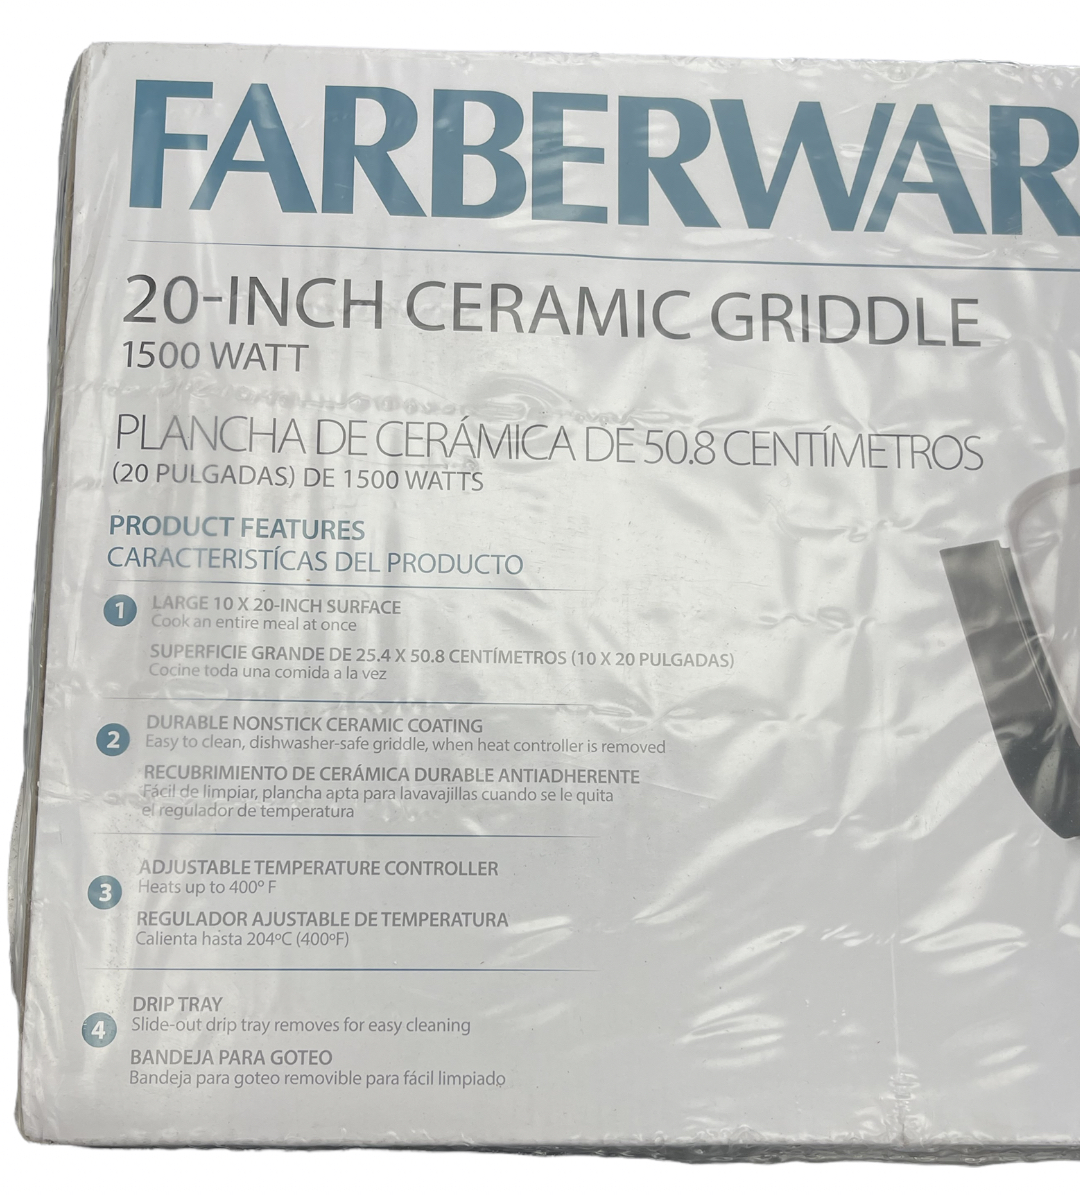 Farberware G793 10x20 inch Ceramic Griddle